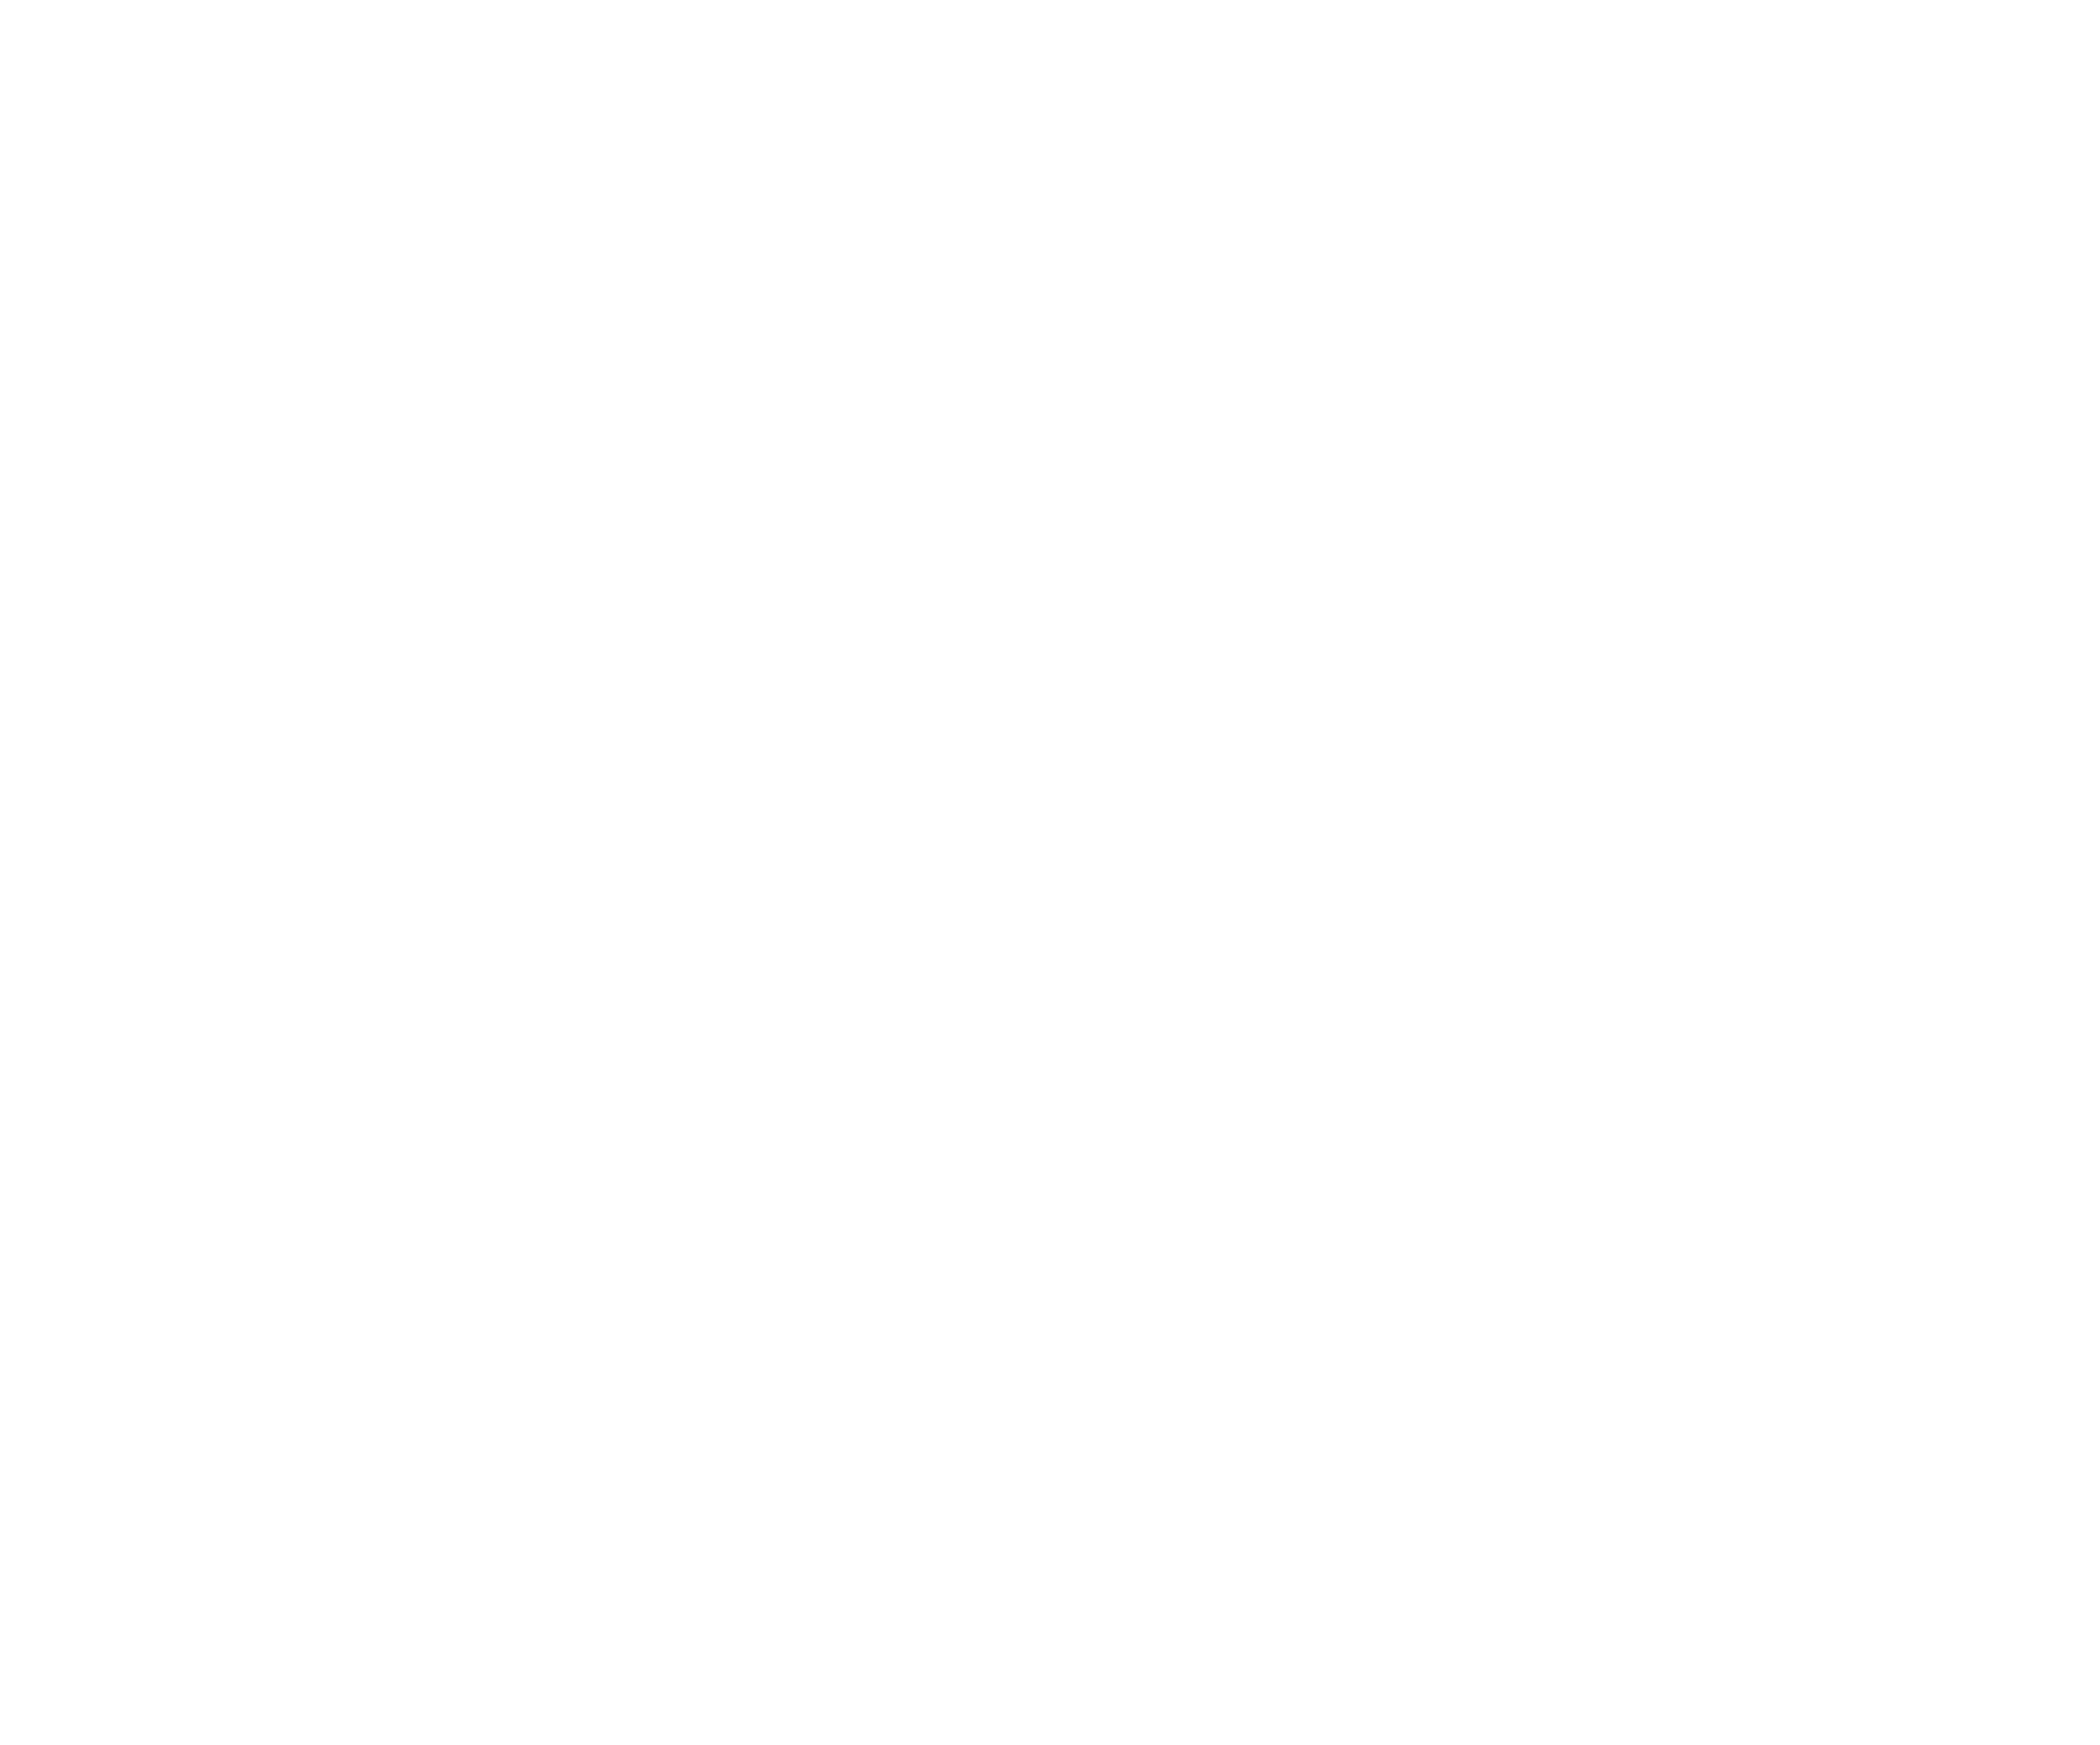 Devos Group